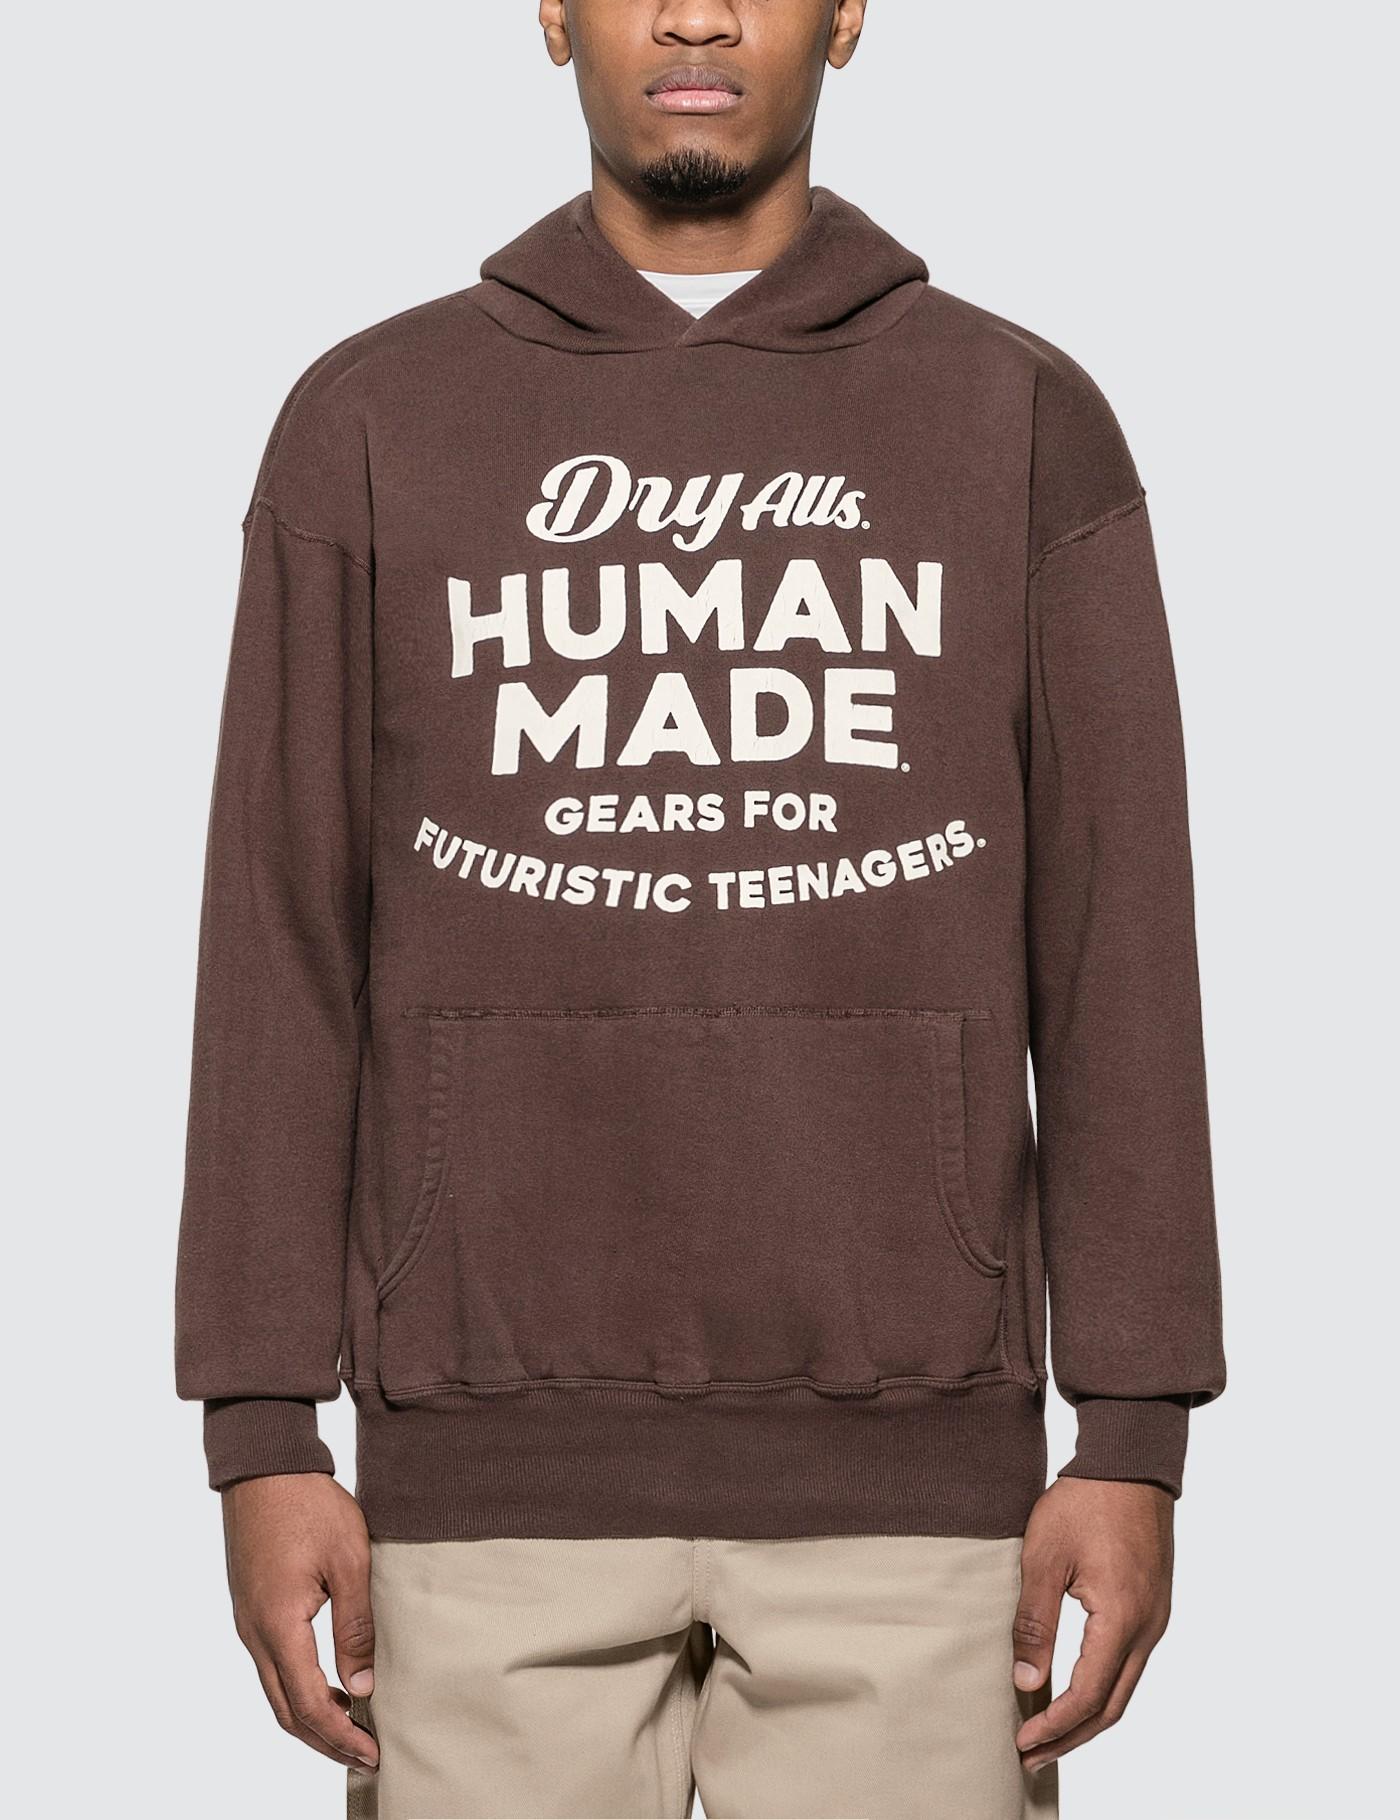 Human Made Fleece Hooded Sweatshirt in Brown for Men - Save 25% - Lyst